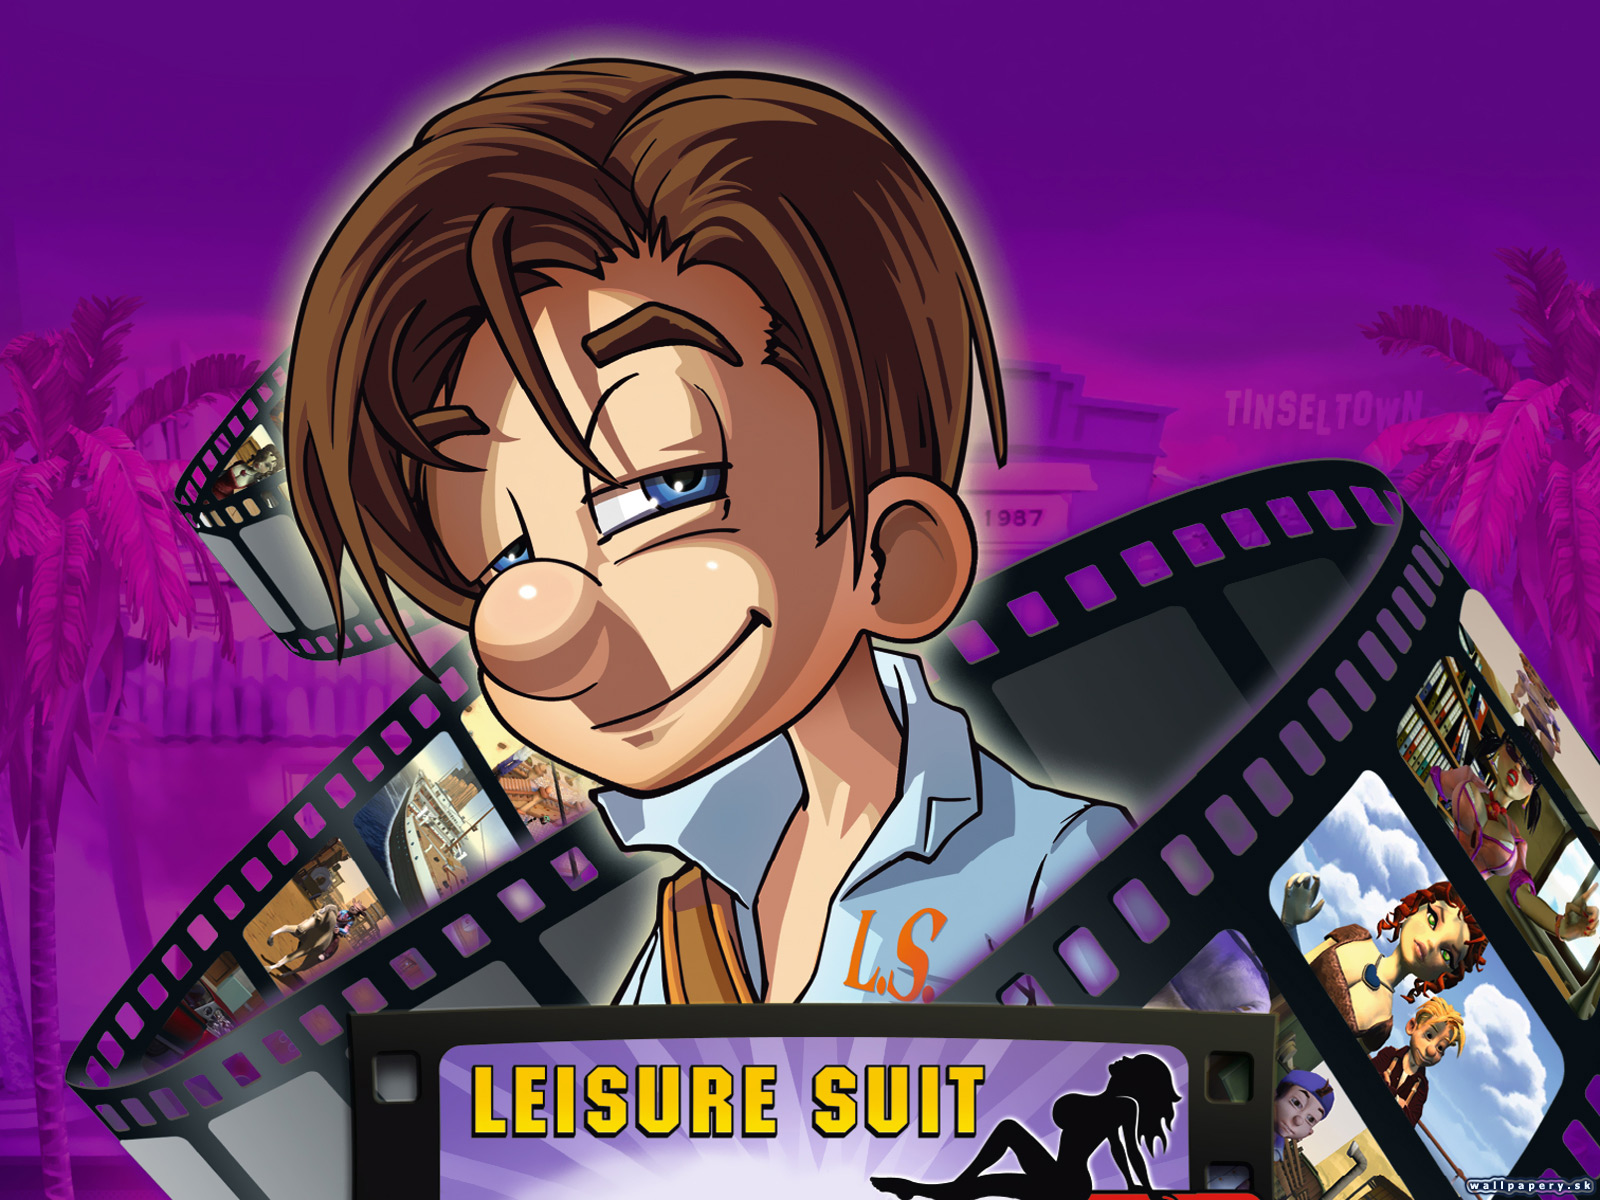 Larry box. Leisure Suit Larry: Box Office Bust. Leisure Suit Larry Box Office Bust 1. Leisure Suit Larry: Box Office Bust (русская версия) xbox360.